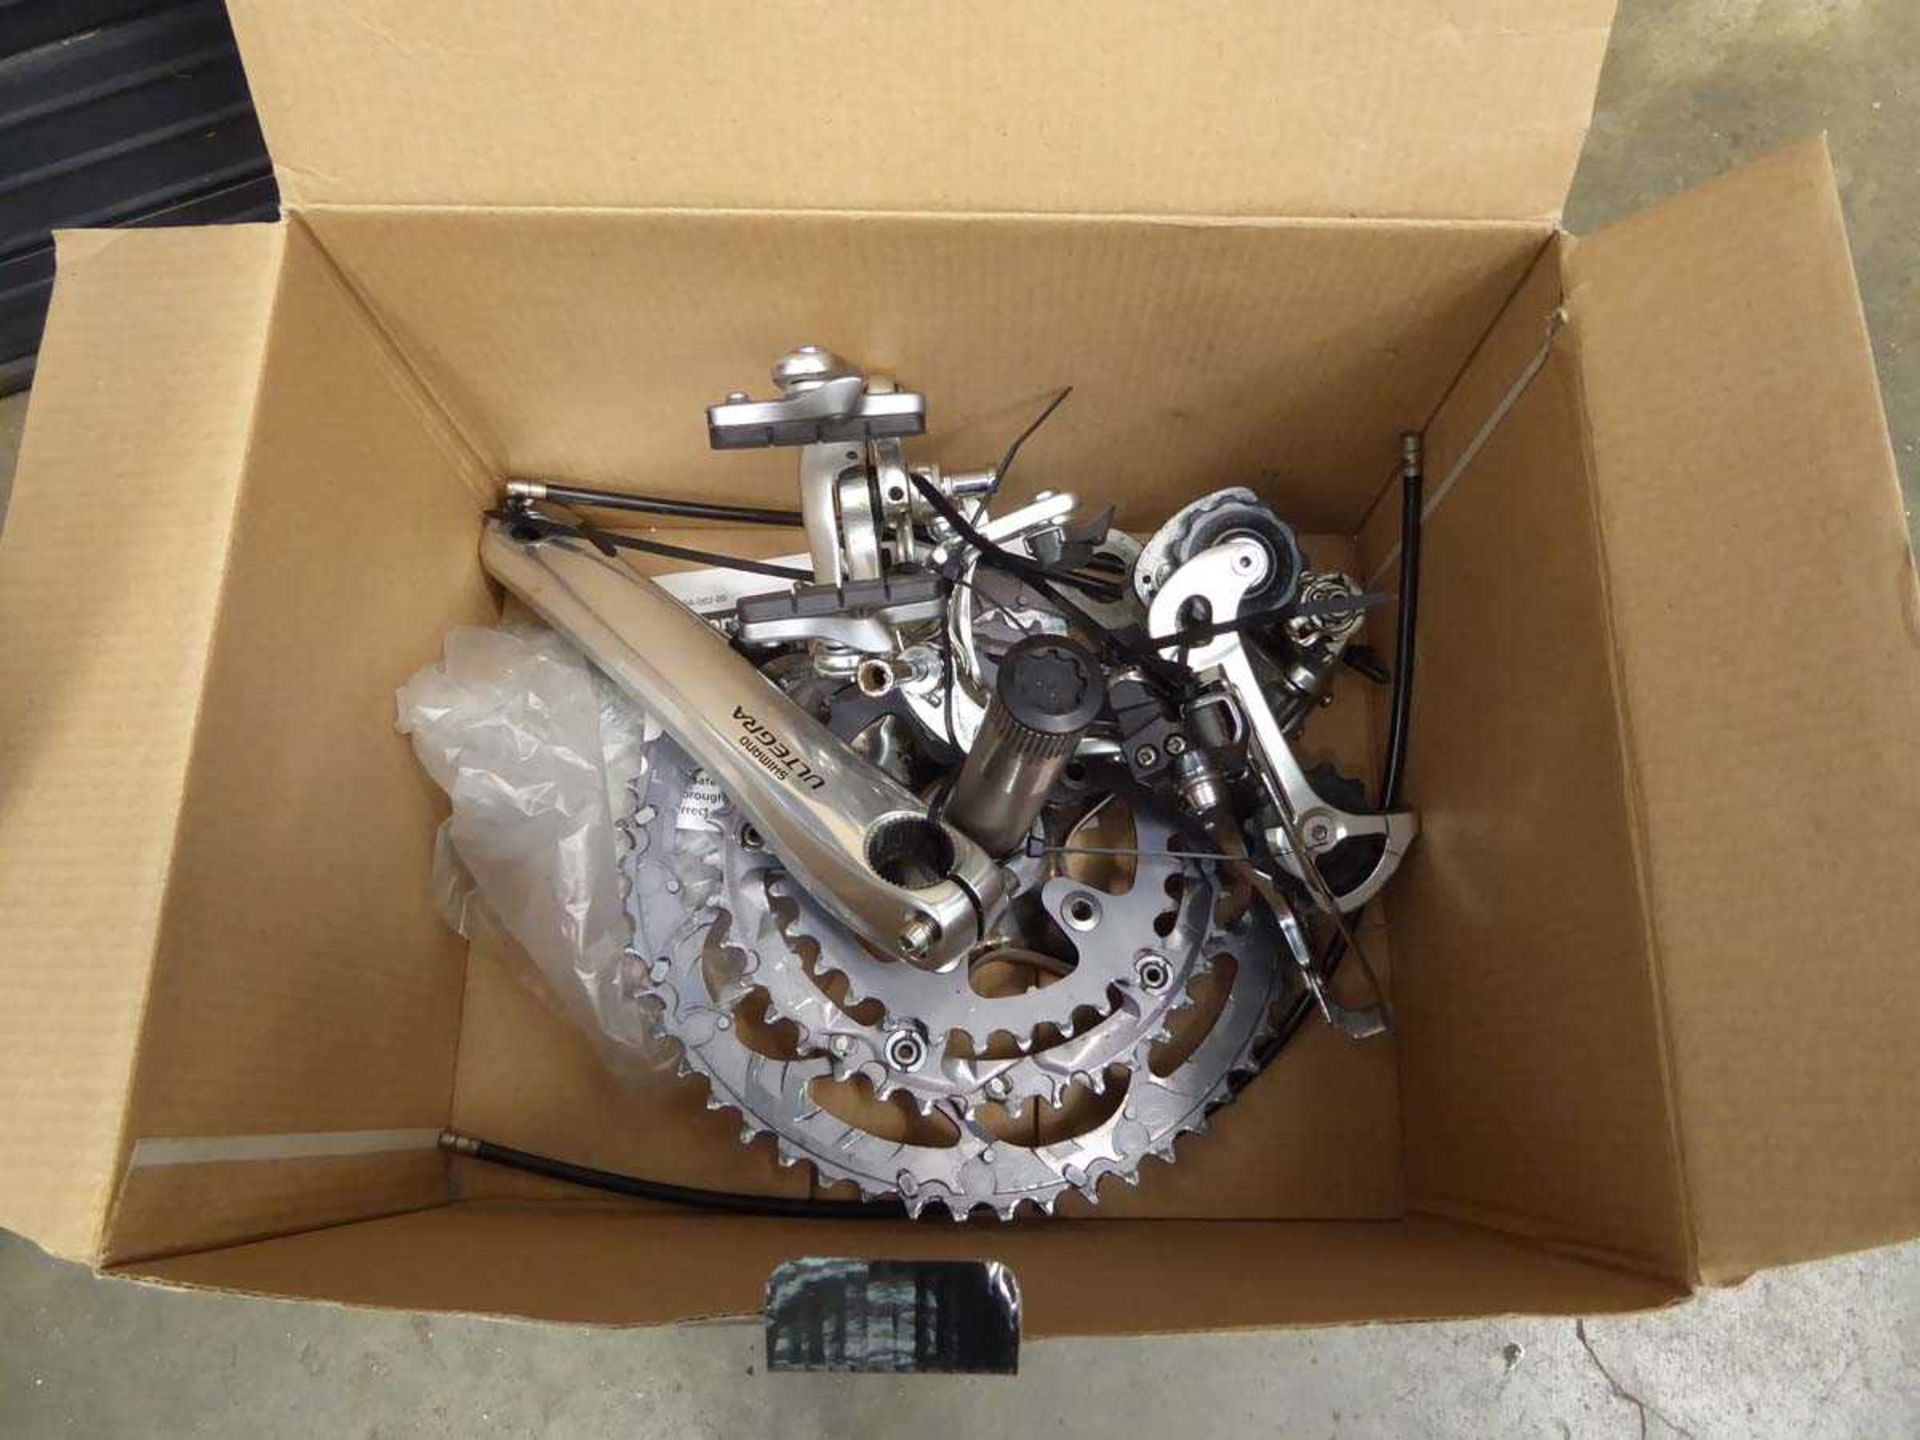 2 racing bike wheels, set of handlebars, and box containing various parts - Image 2 of 2